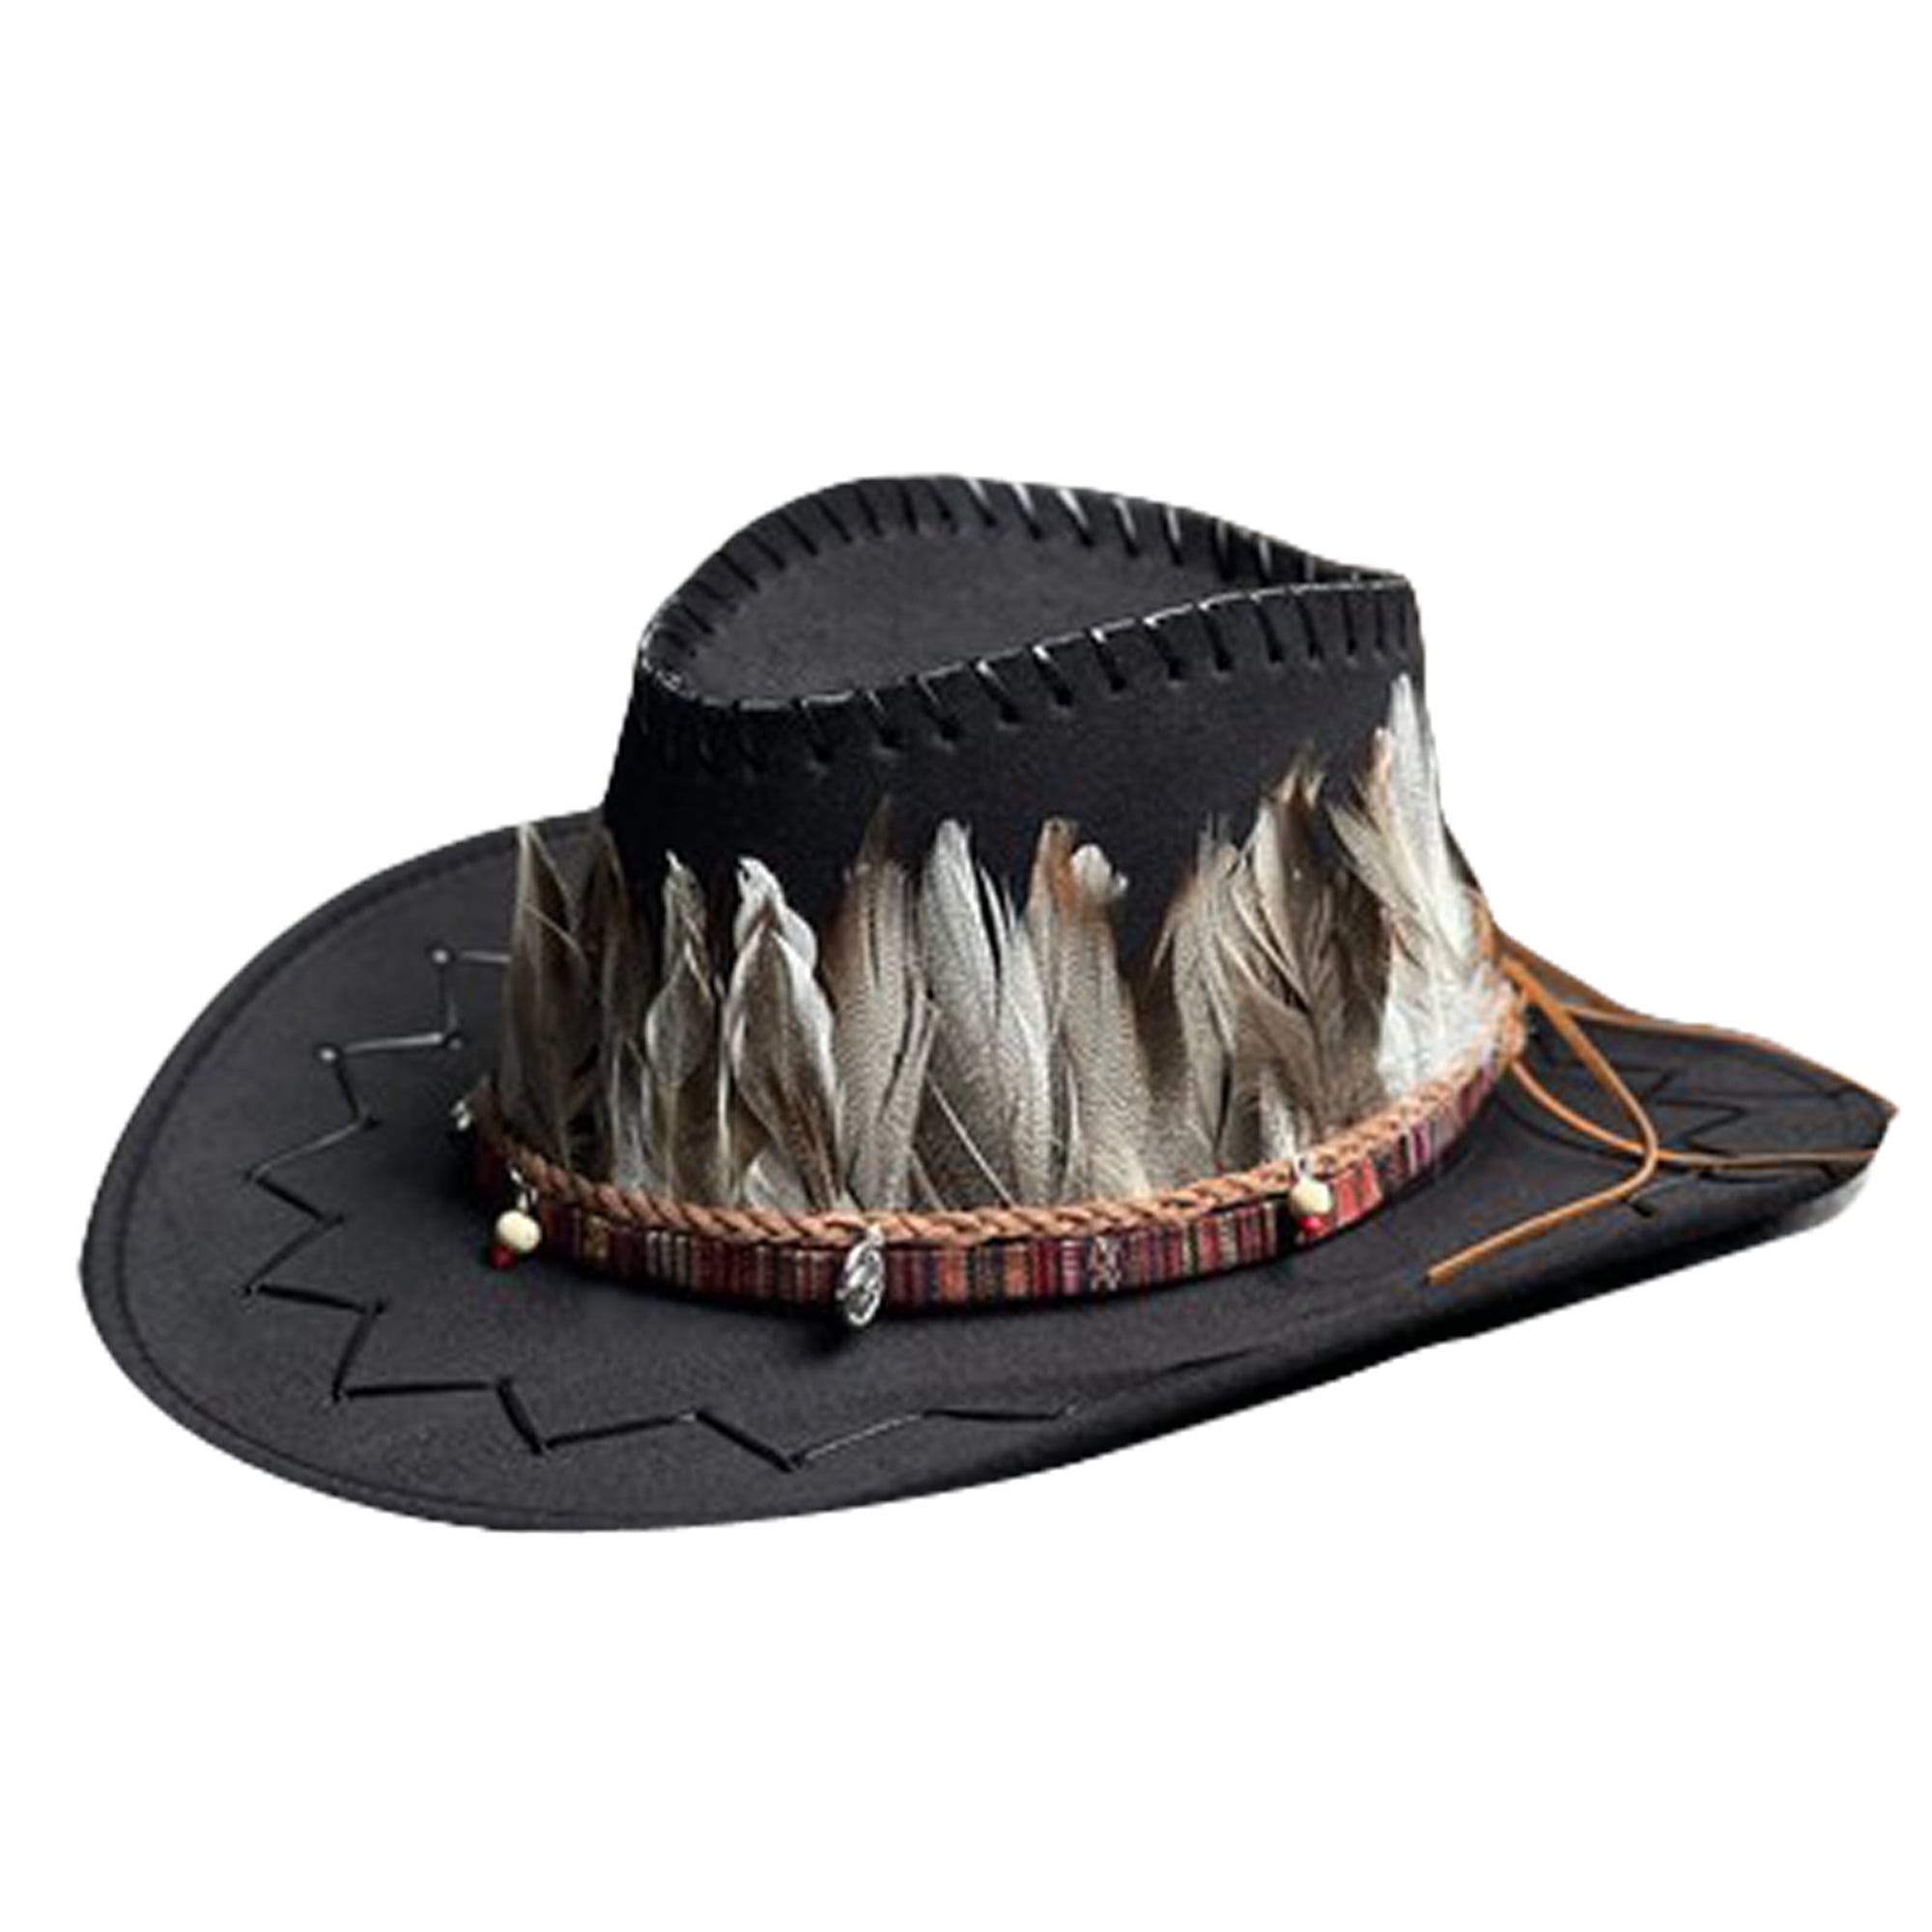 Sunisery Women Men Vintage Western Cowboy Hats Retro Feather Fedora Felt  Wide Brim Hat Hiking Rave Party Travel Costume Accessory 